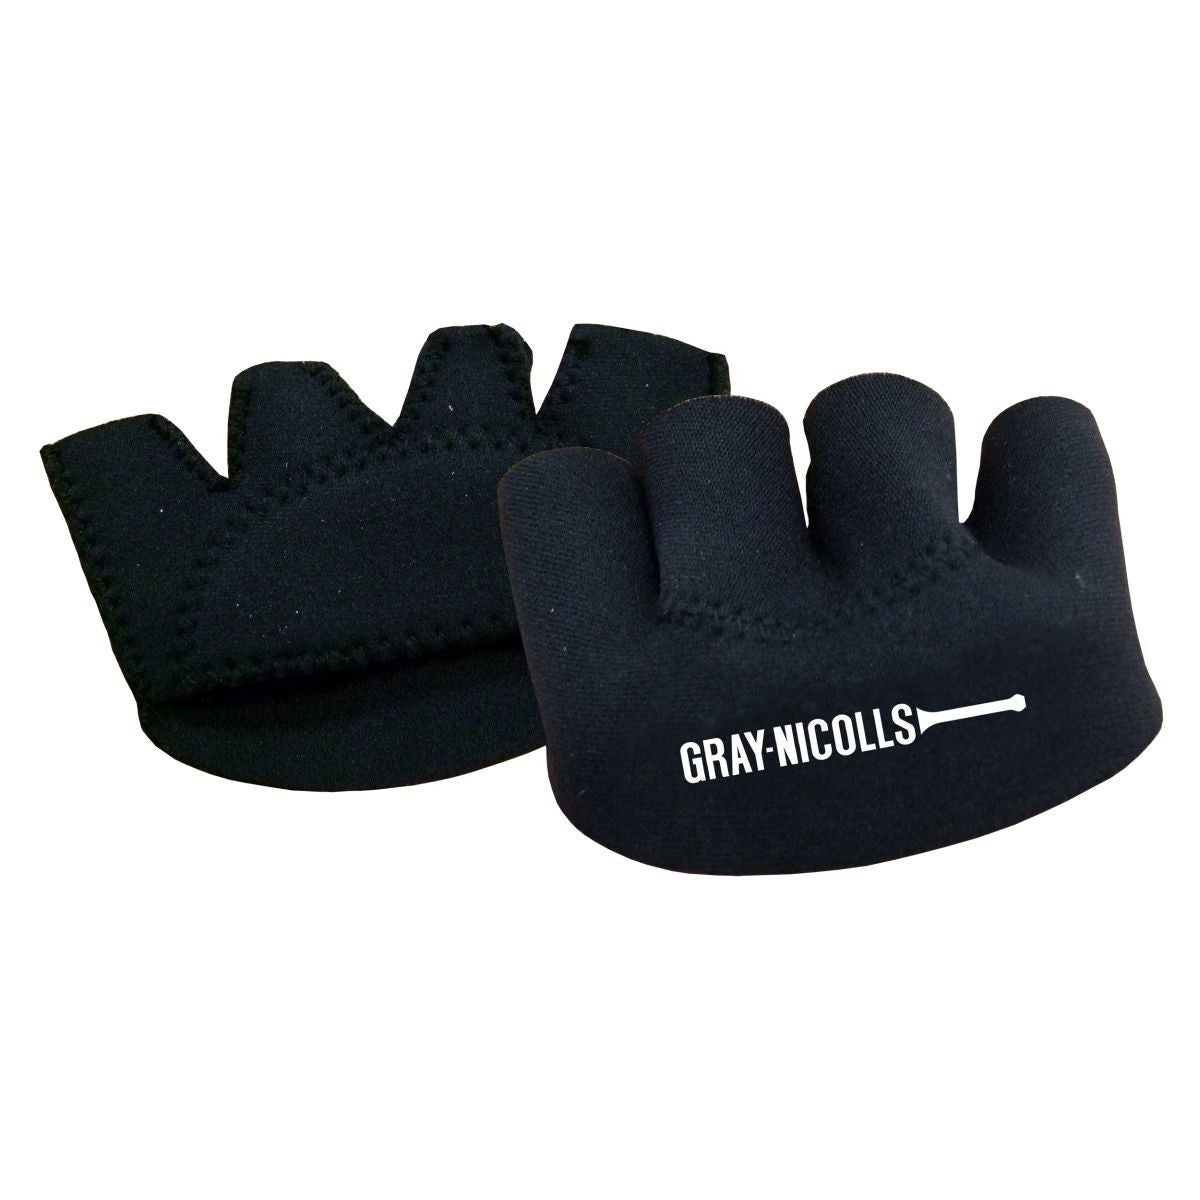 Gray-Nicolls MCP Protection Gloves